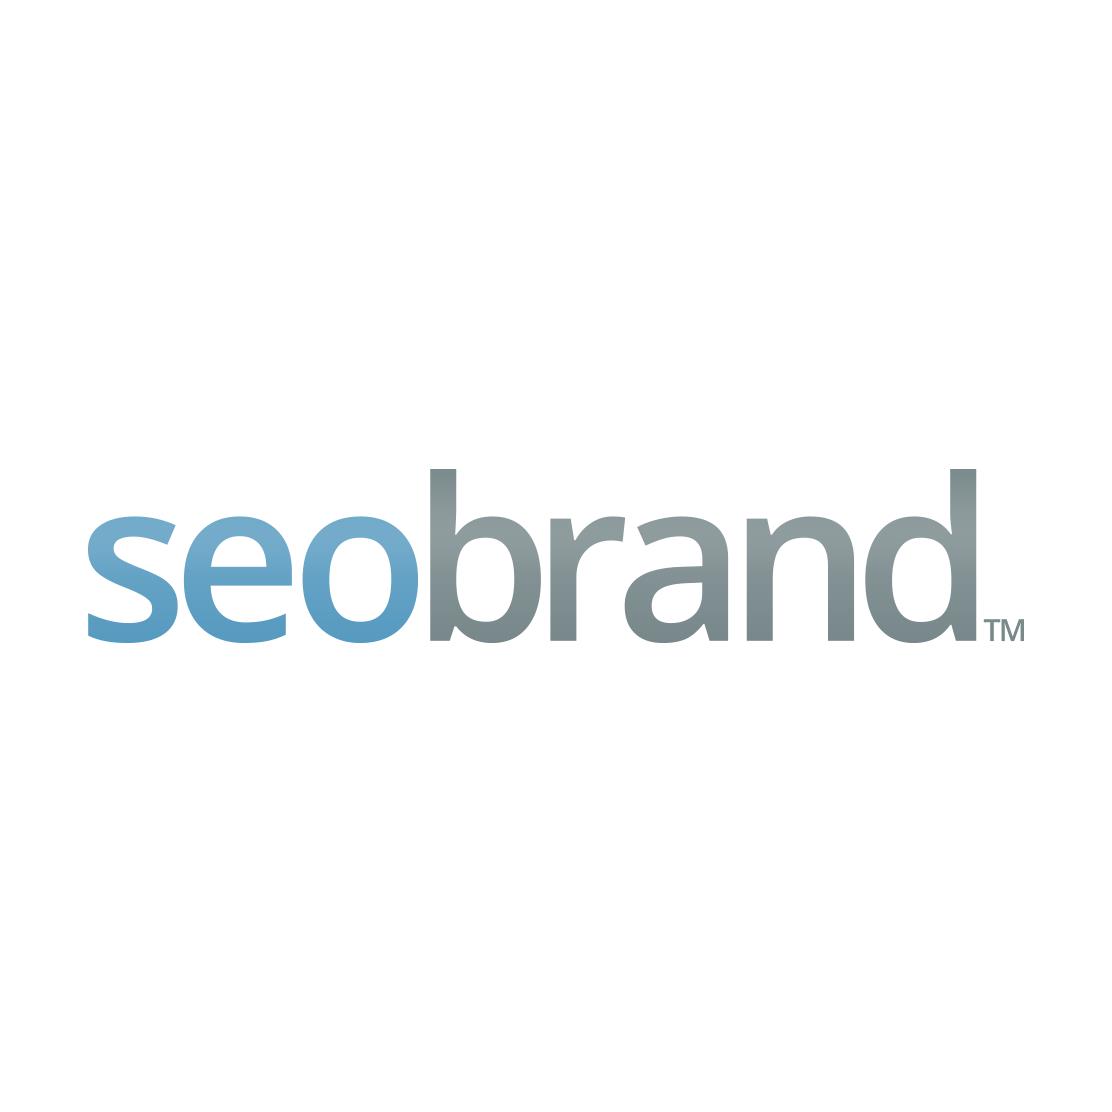 Top ORM Agency Logo: SEO Brand